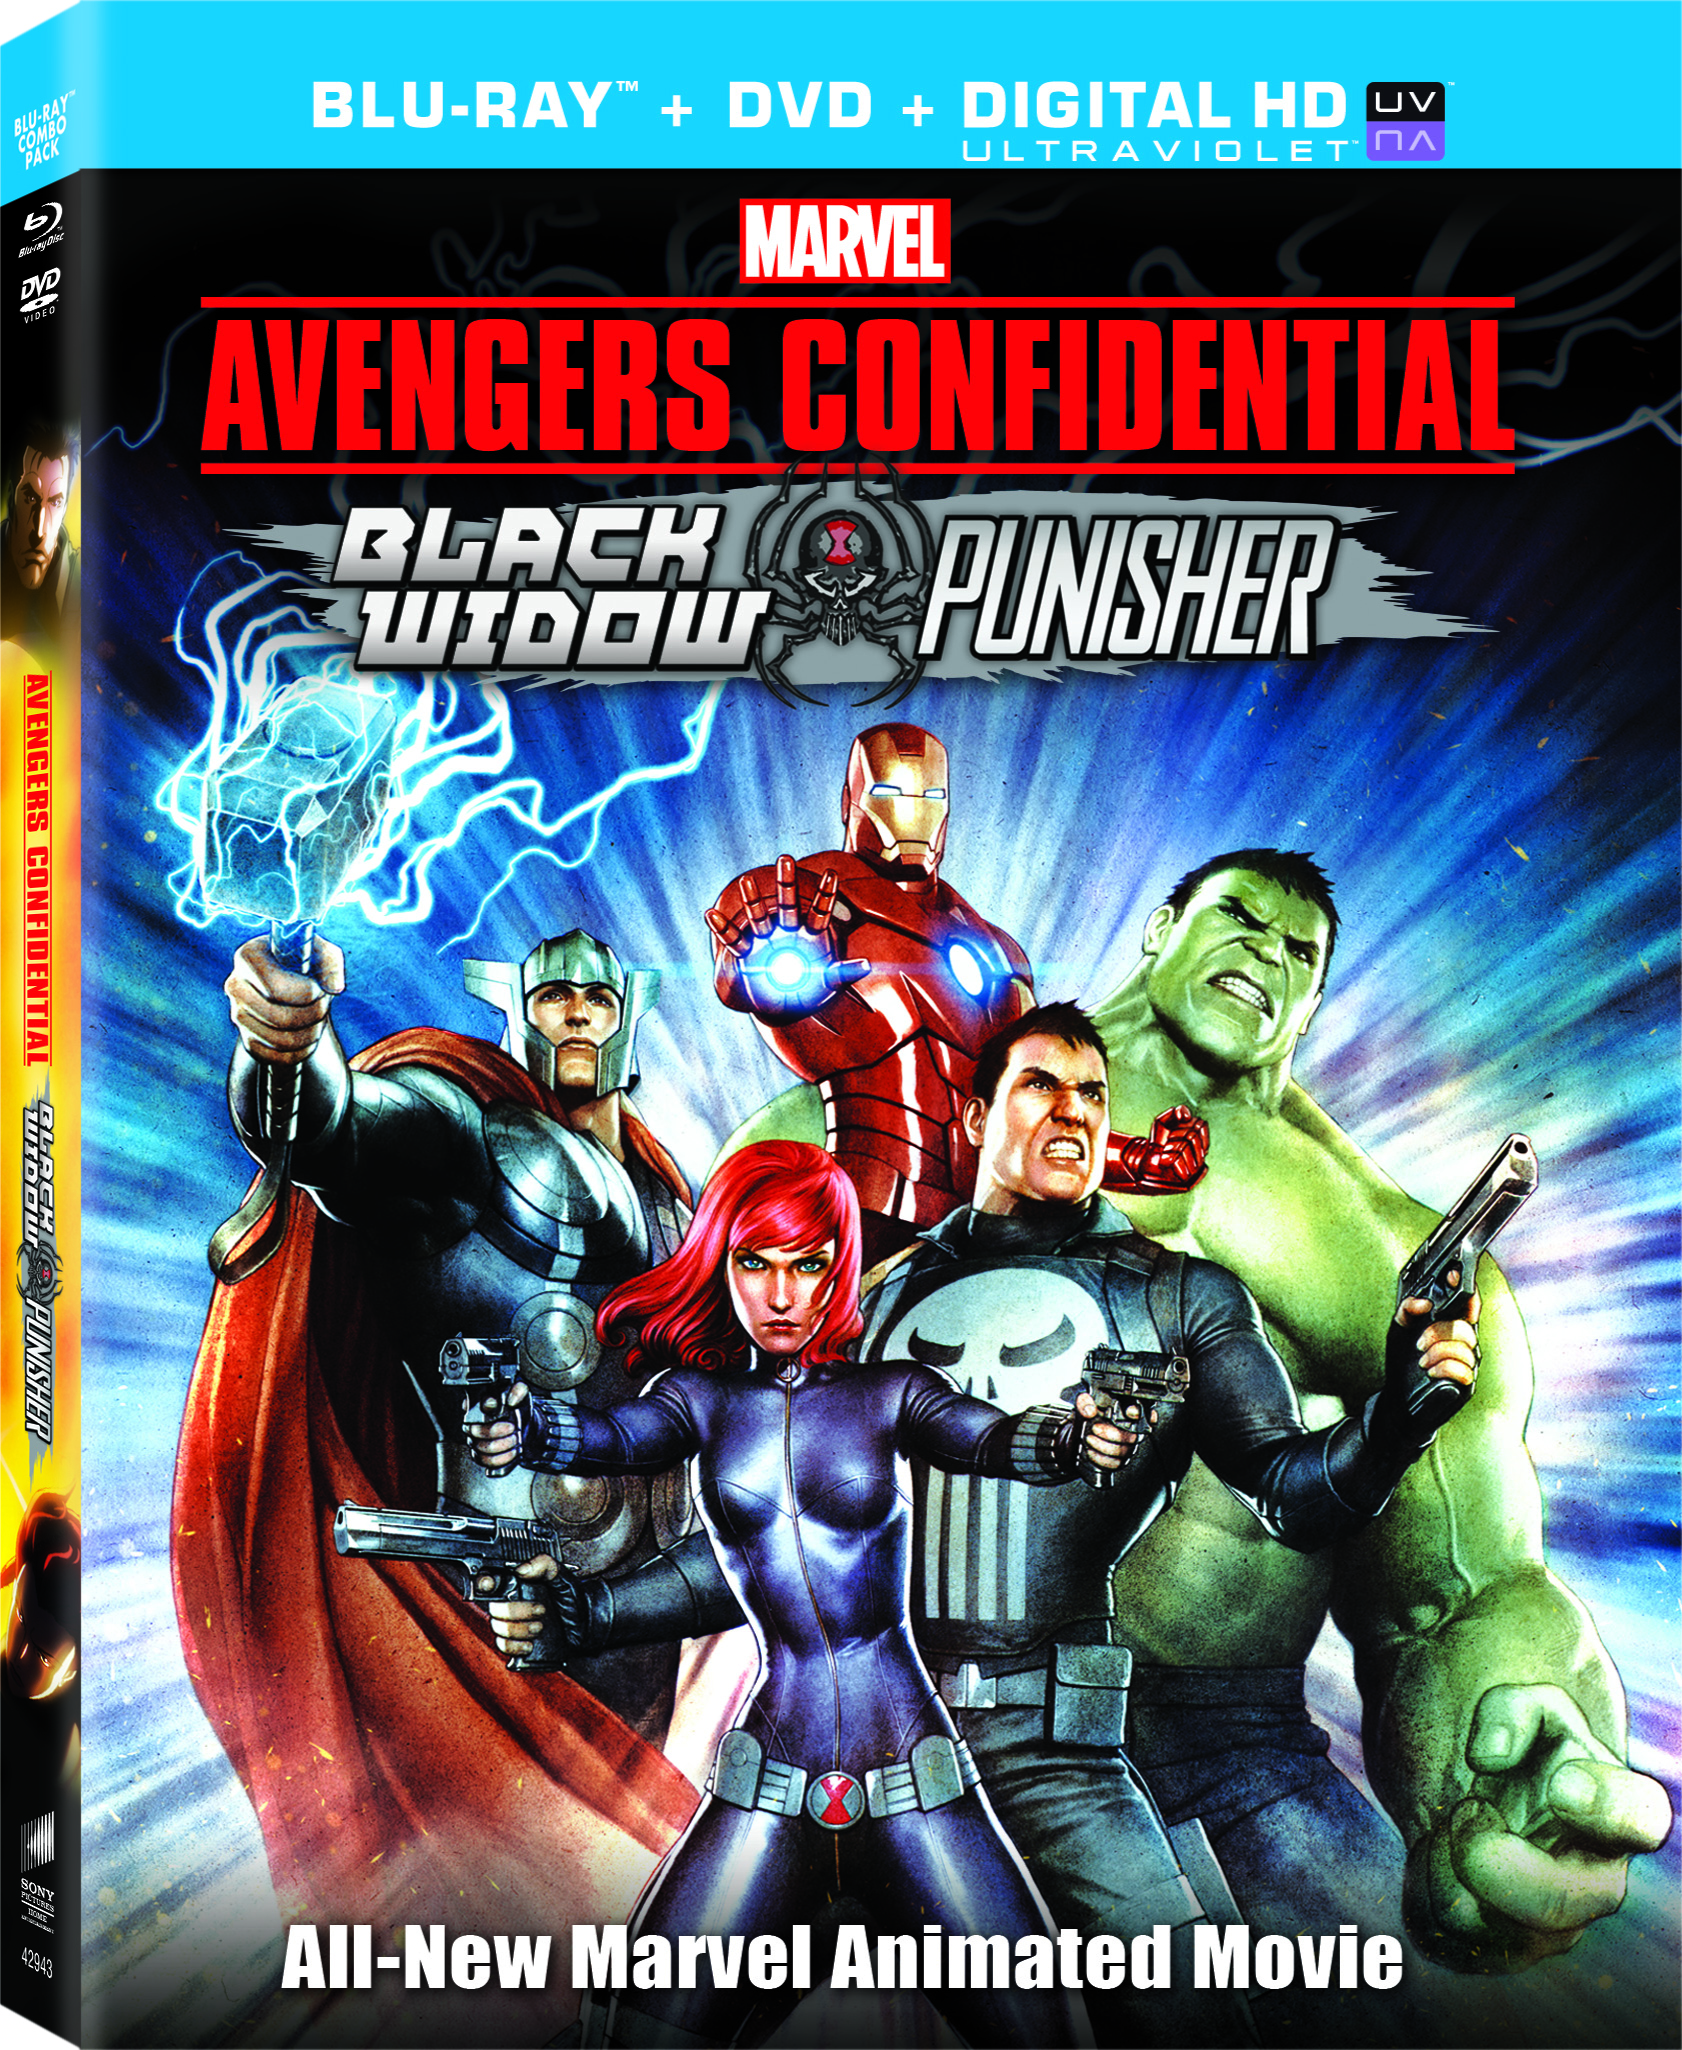 Avengers Confidential Black Window & Punisher (2014) ขบวนการ อเวนเจอร์ส แบล็ควิโดว์ กับ พันนิชเชอร์ Jennifer Carpenter